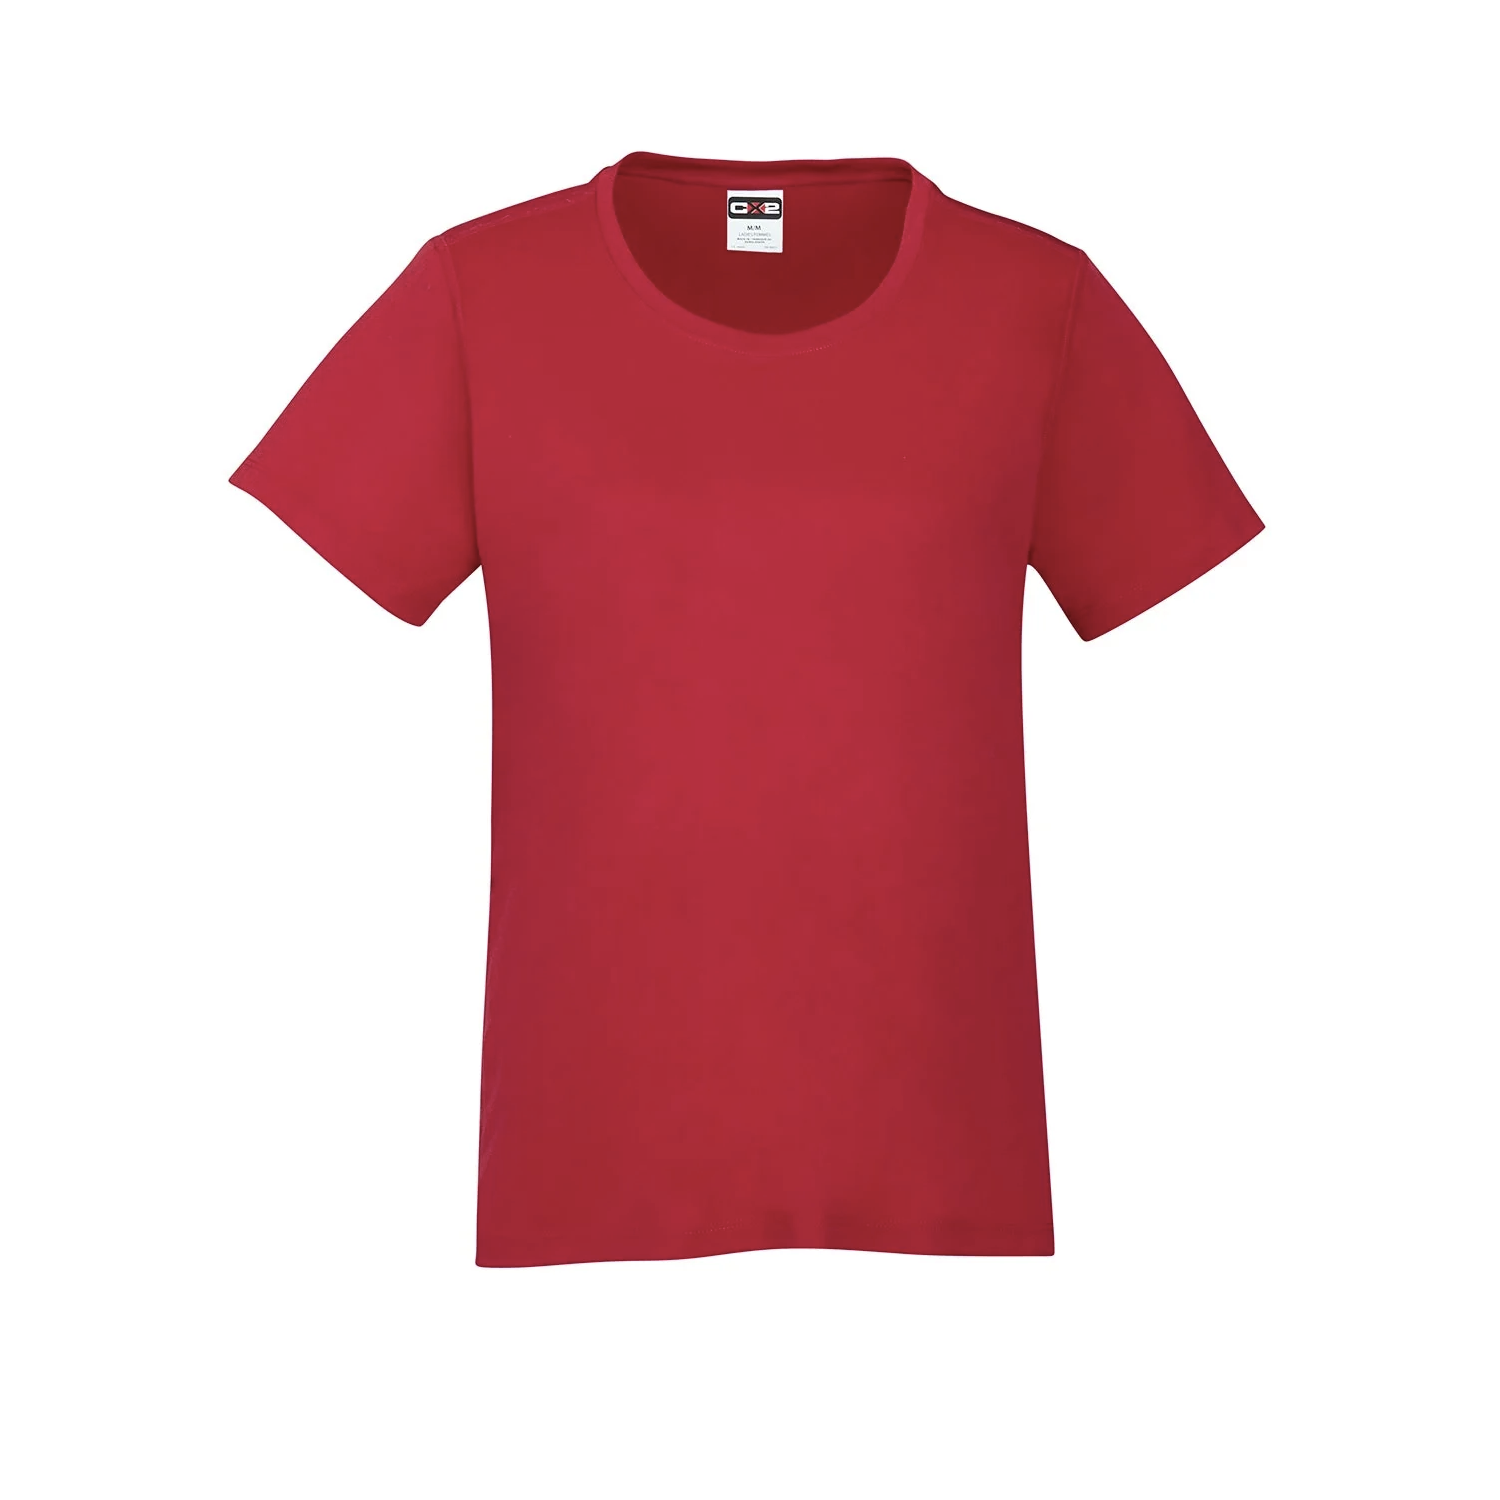 S05936 - Coast - Ladies Crew Neck Polyester T-Shirt - promopig